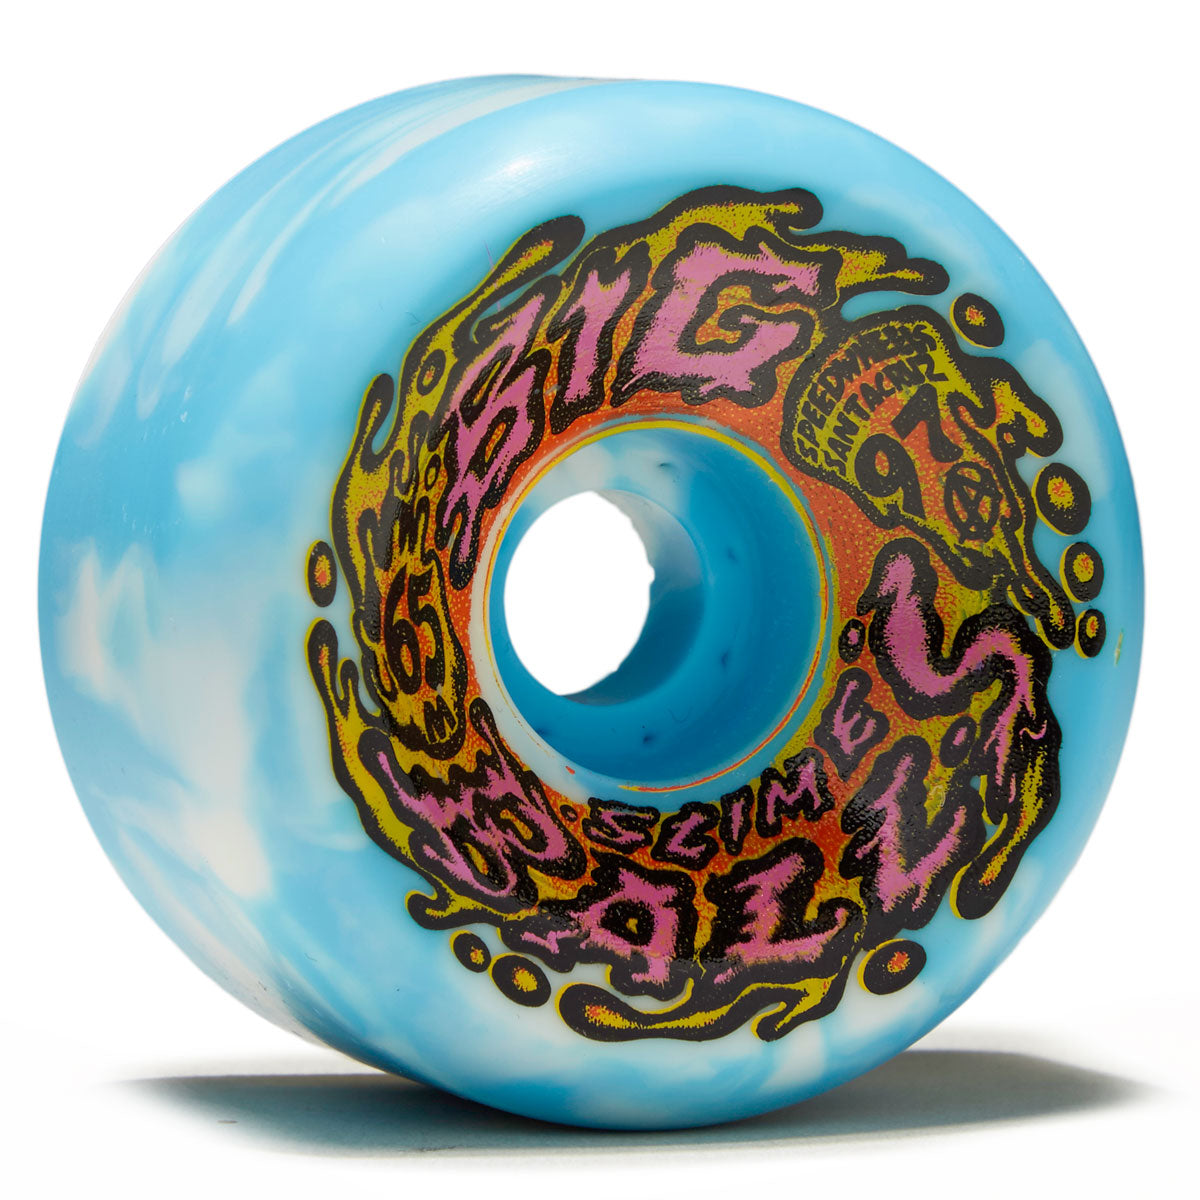 Slime Balls Big Balls 97a Skateboard Wheels - Blue/White Swirl - 65mm image 1